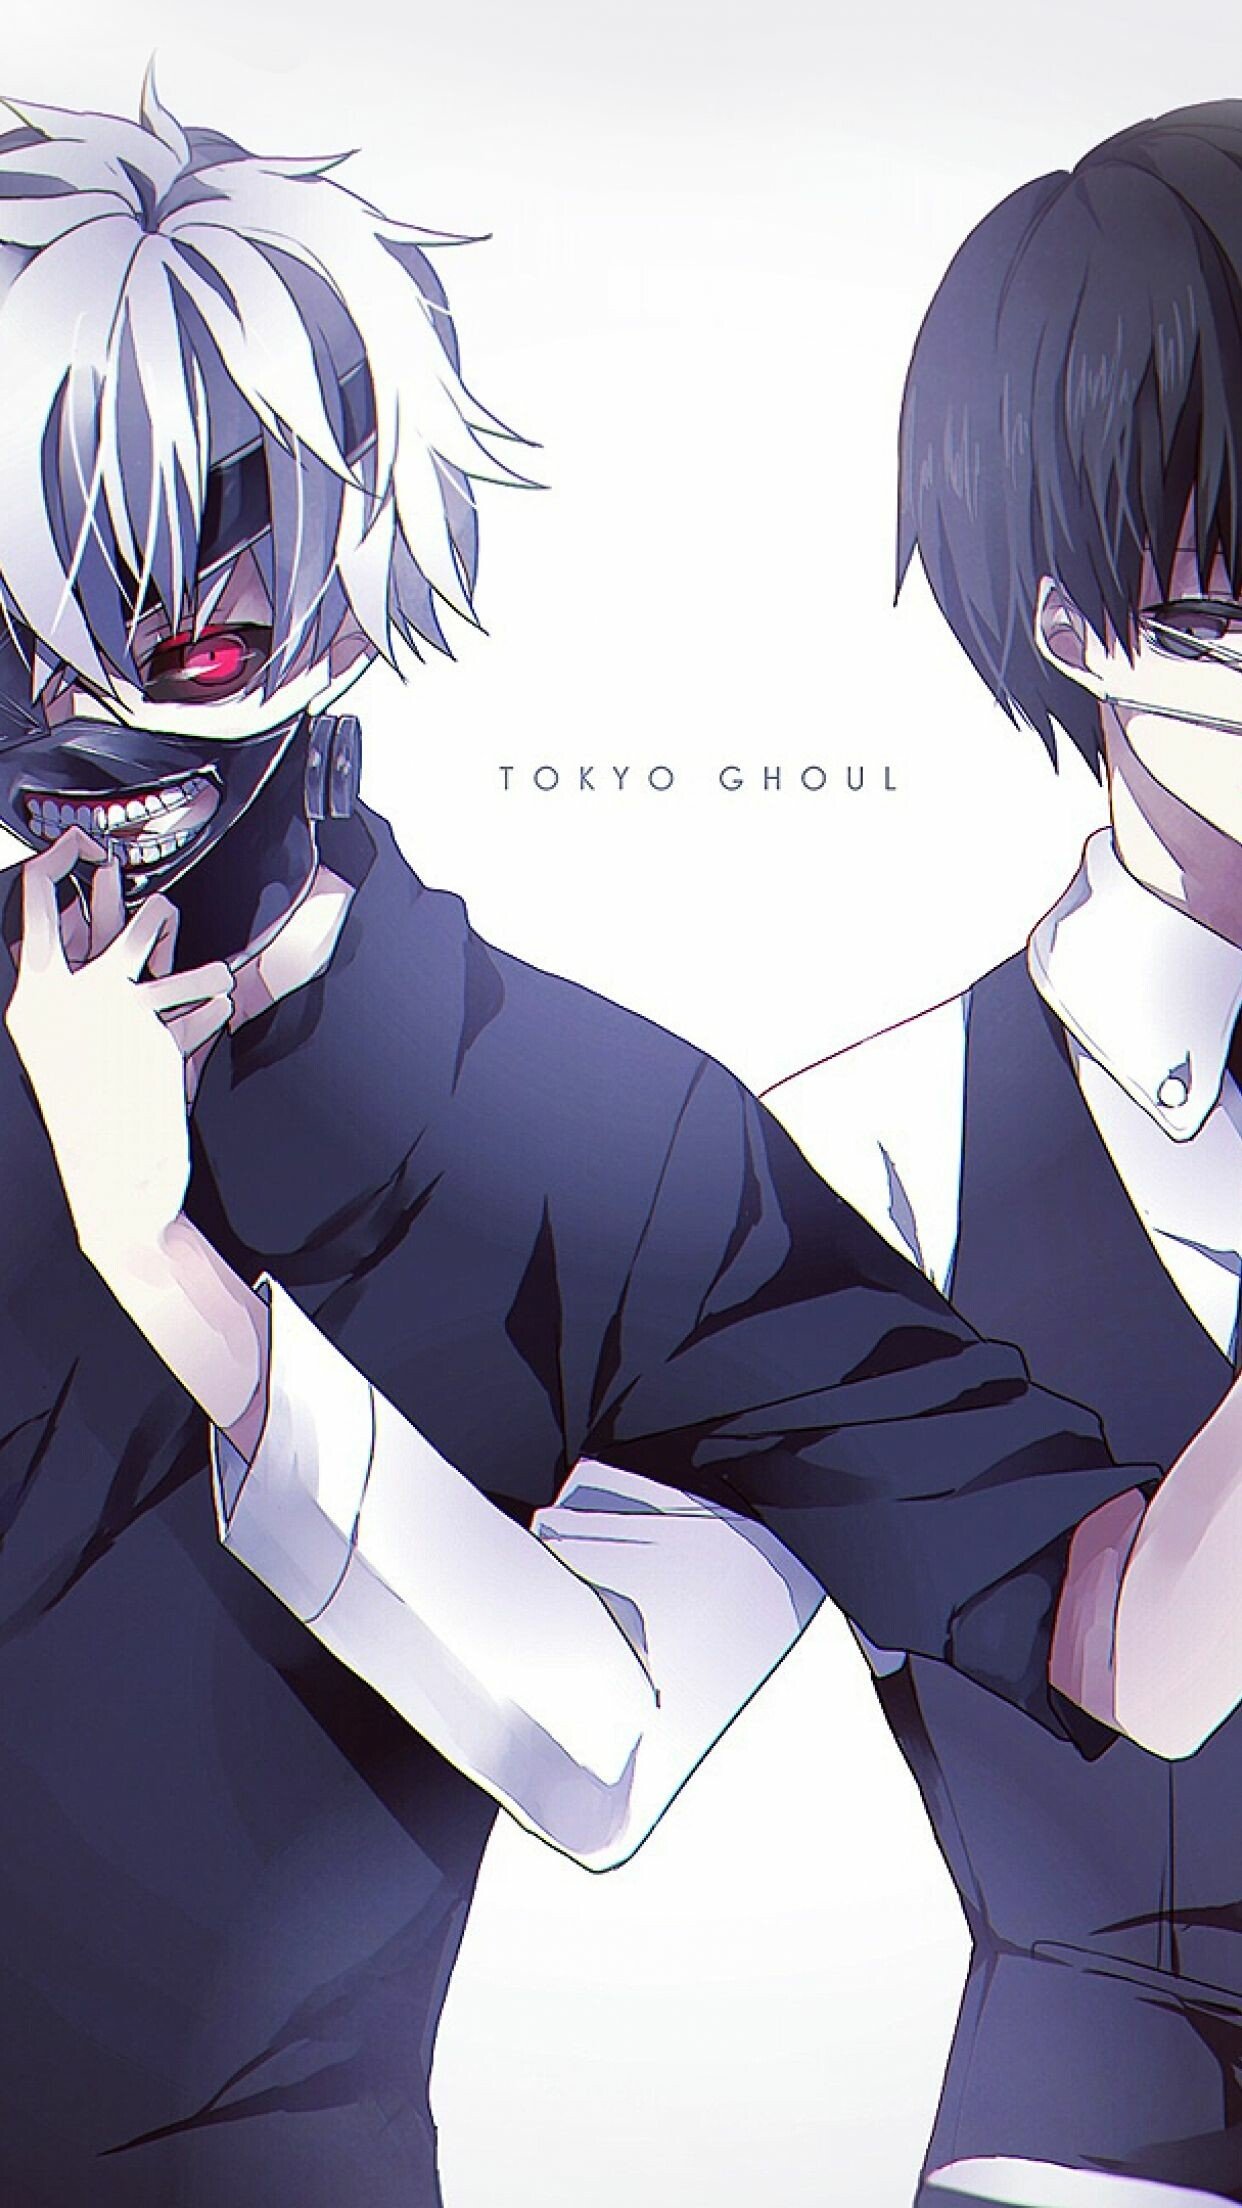 Tokyo Ghoul - Opening